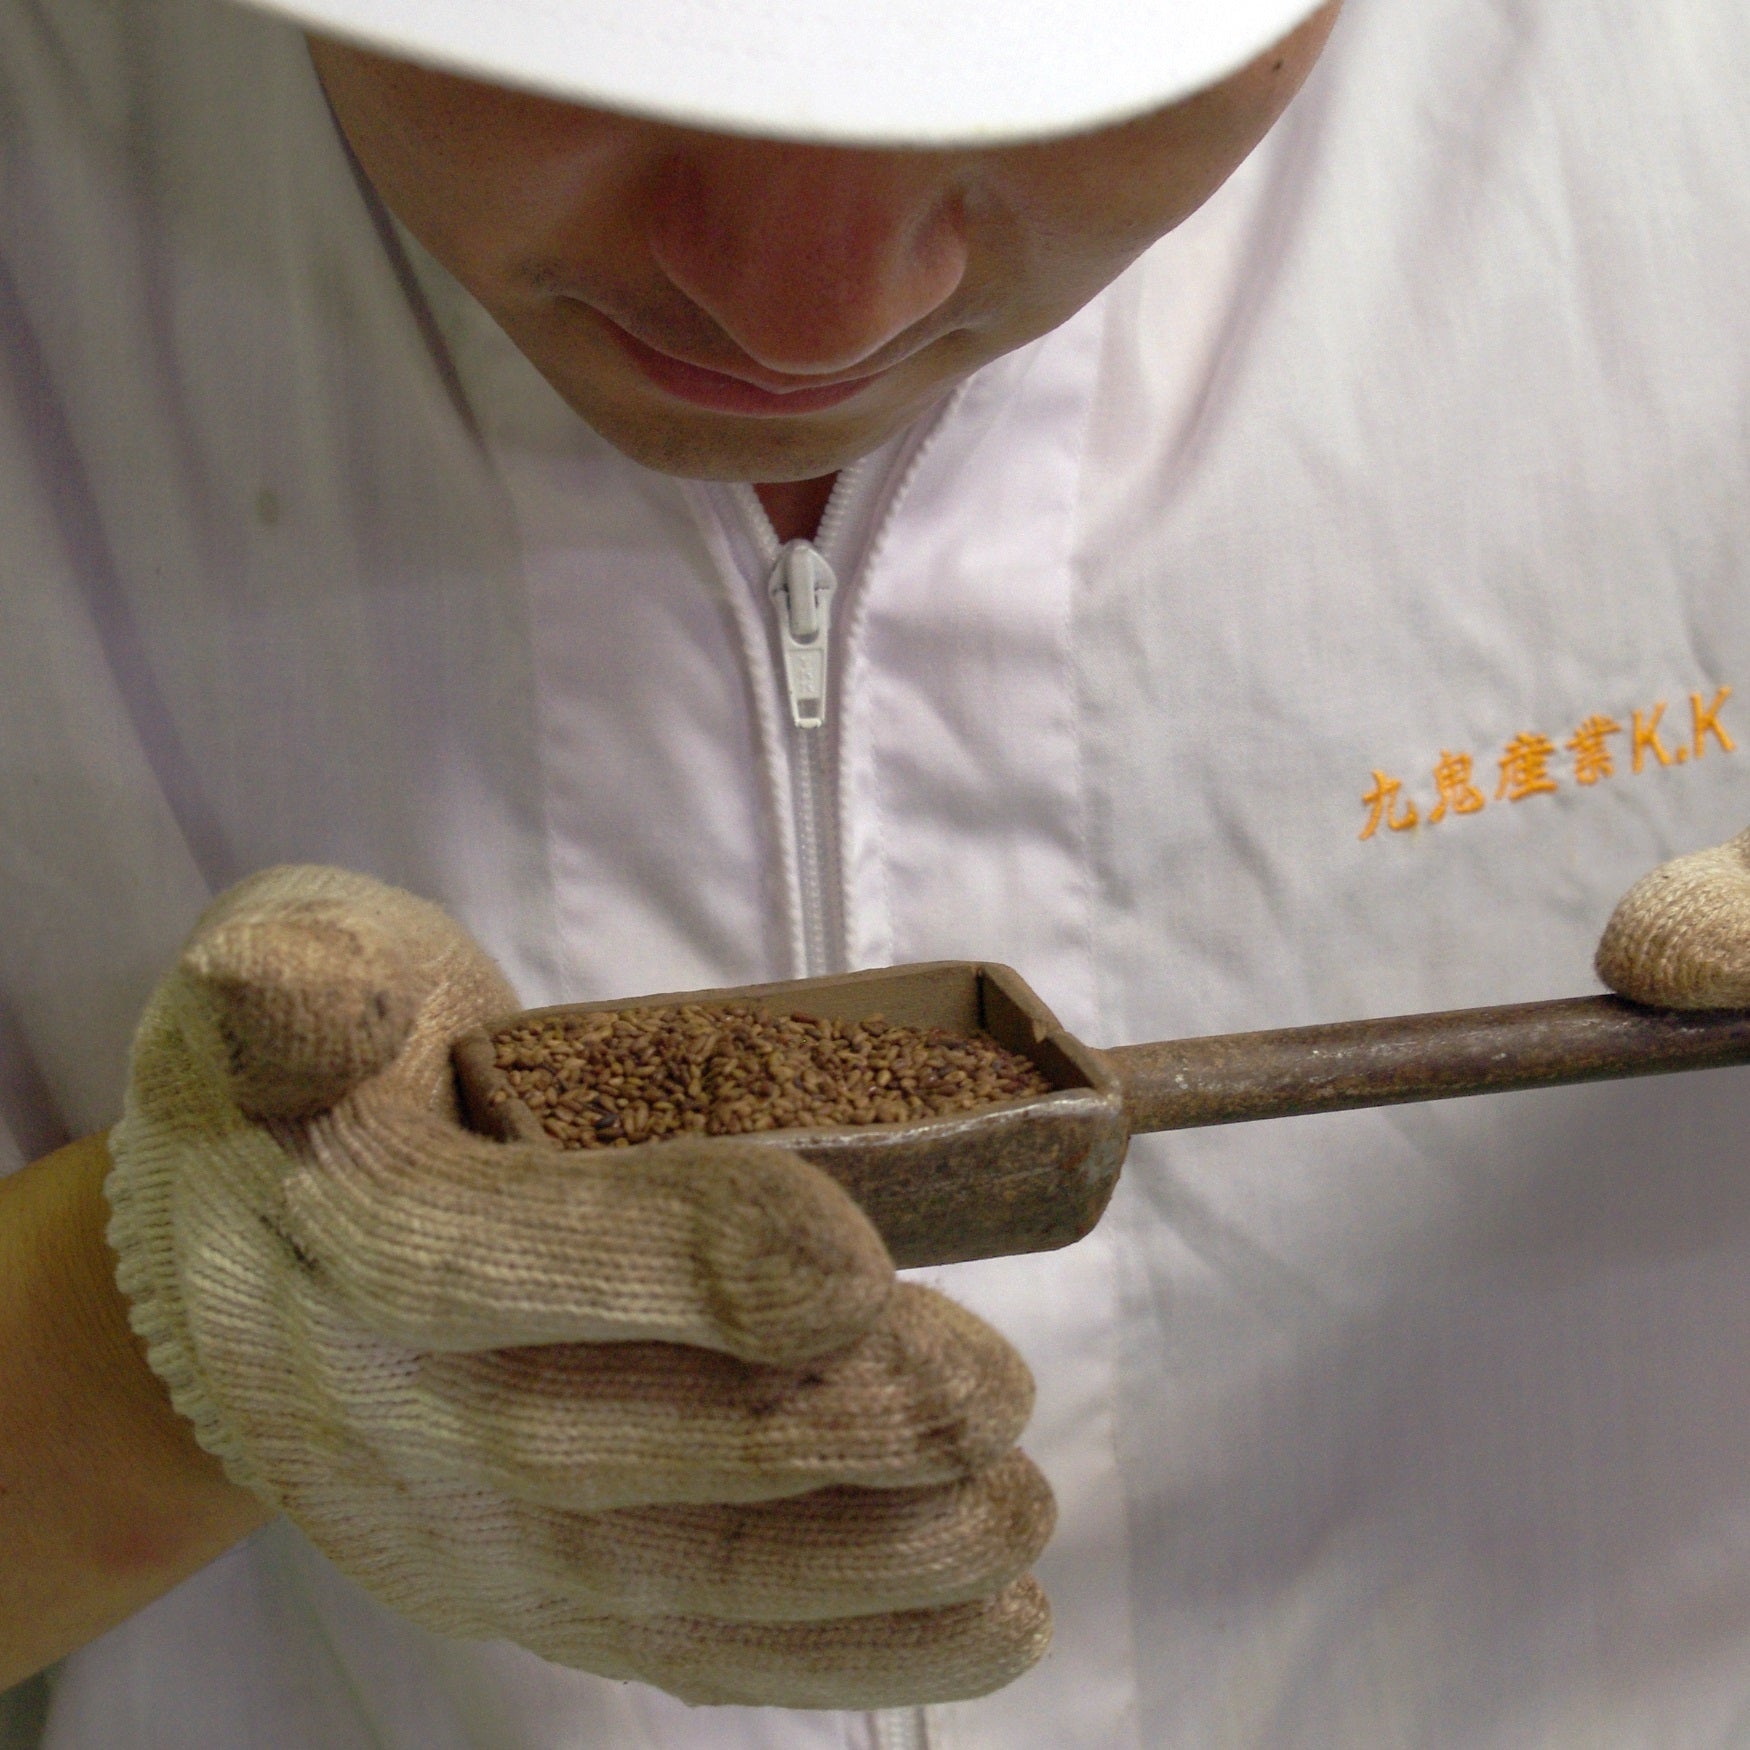 Craftsman gazing at roasted sesame seeds